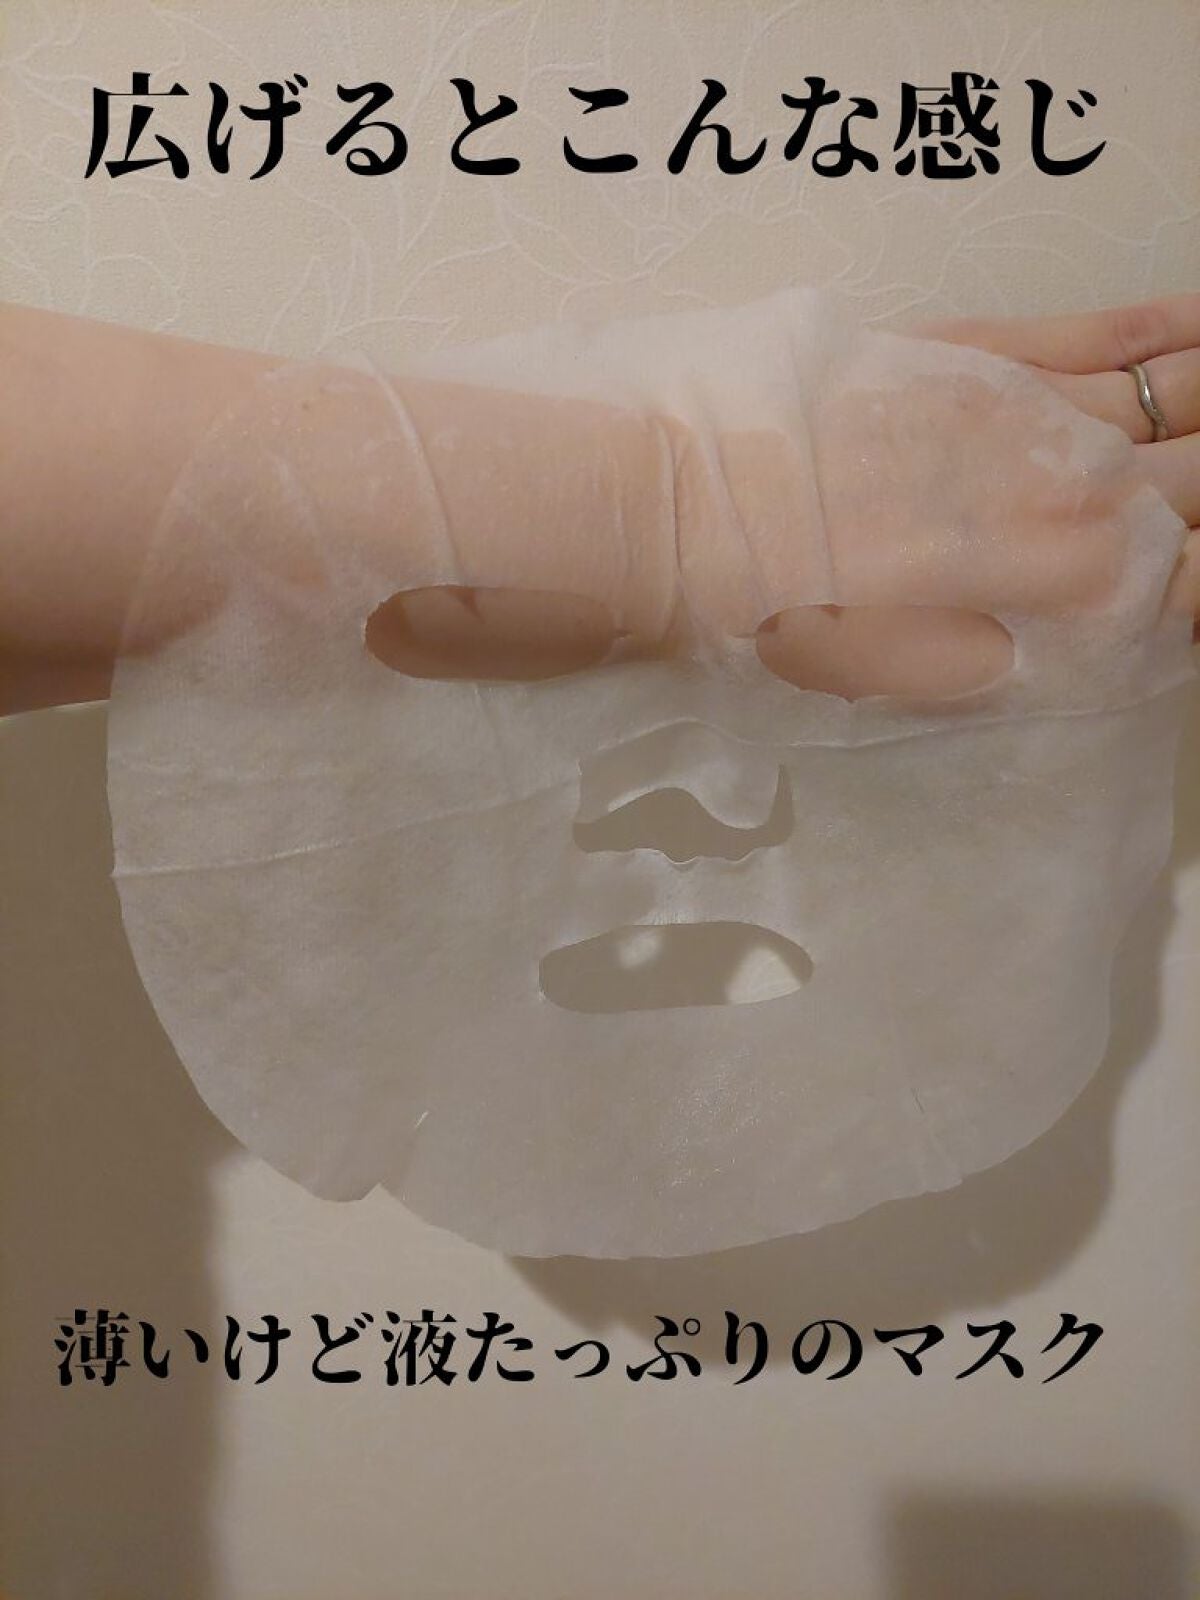 Flower Lab Essence Mask/Mamonde/シートマスク・パックを使ったクチコミ（2枚目）